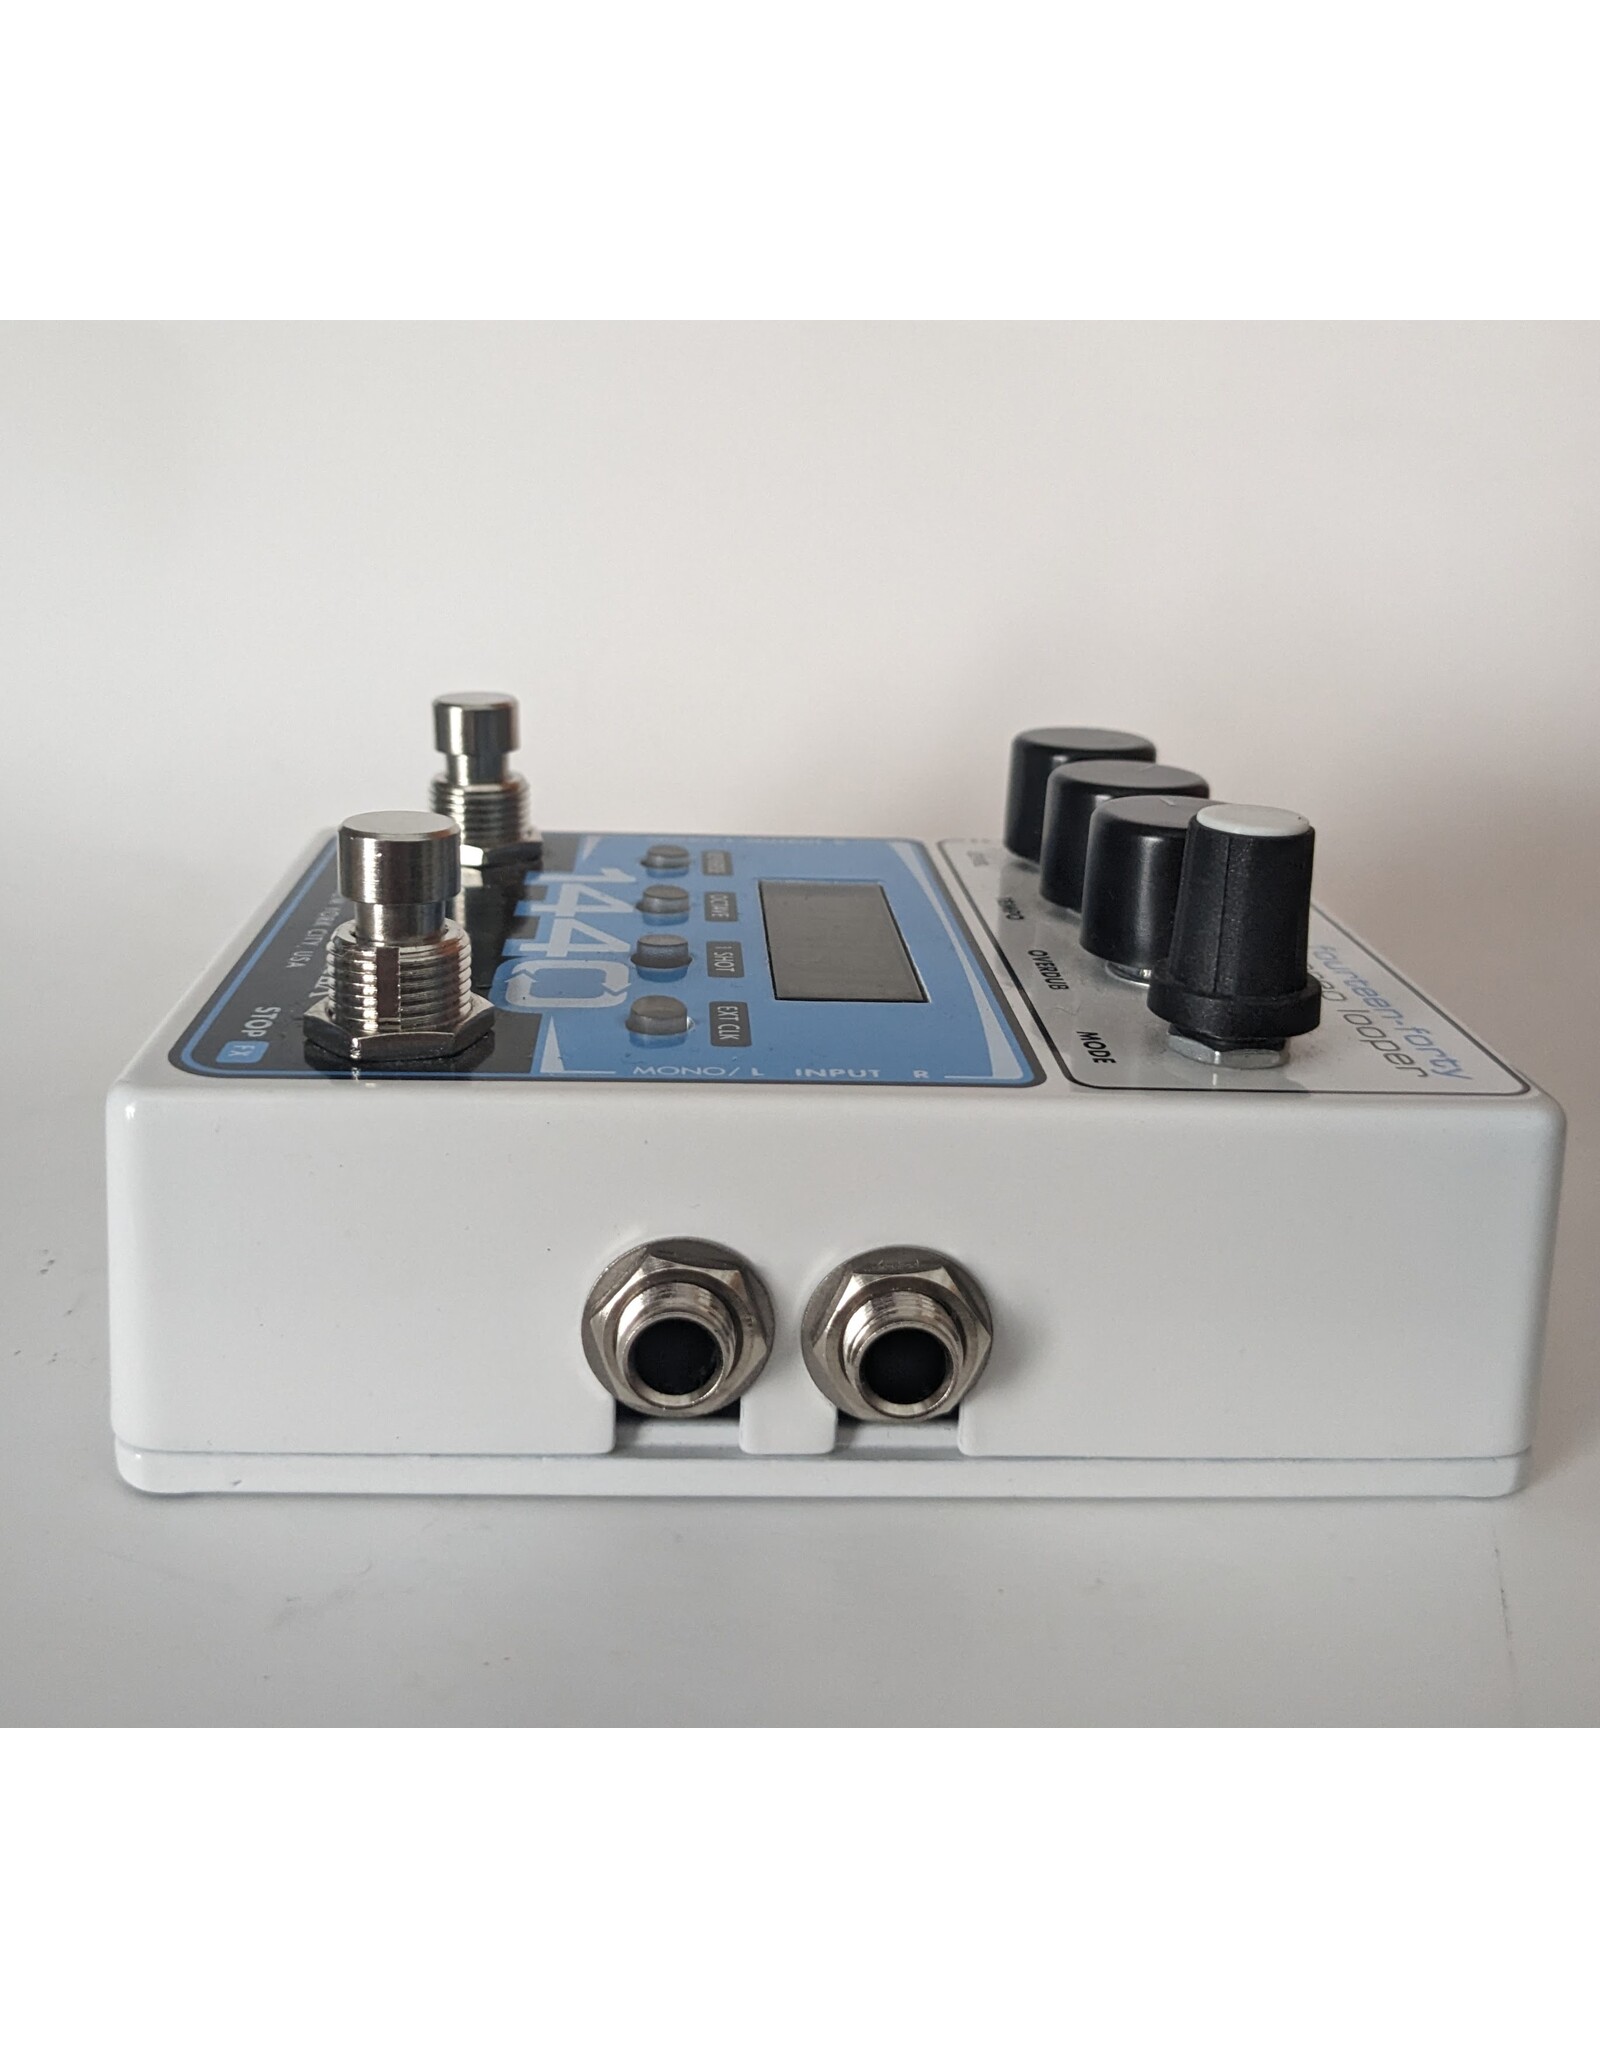 Electro-Harmonix EHX 1440 Stereo Looper w/ Box, Used